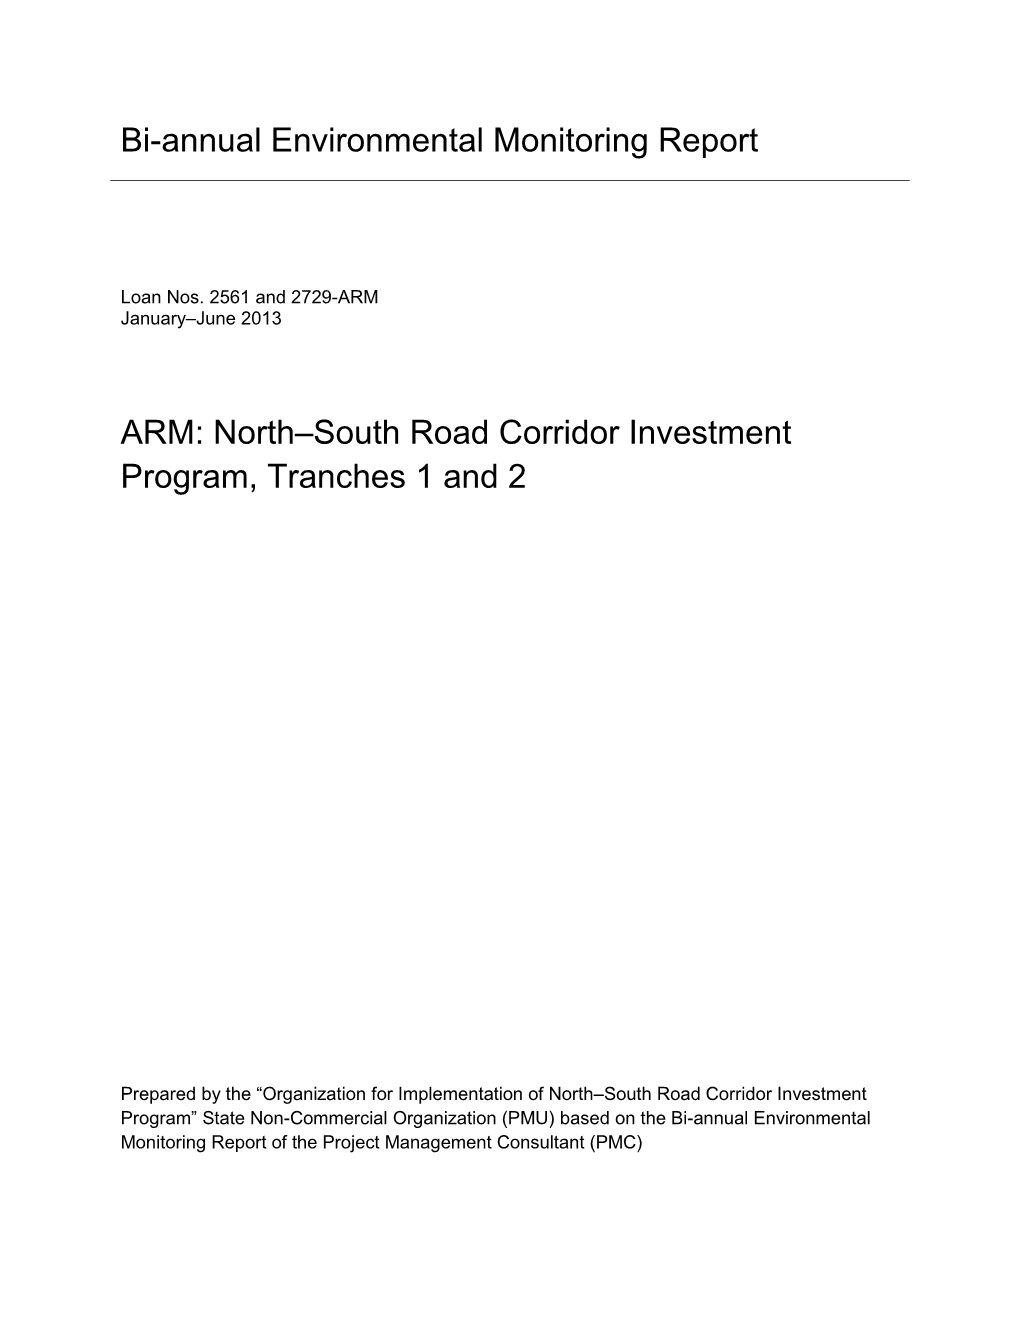 42145-023: North-South Road Corridor Investment Program